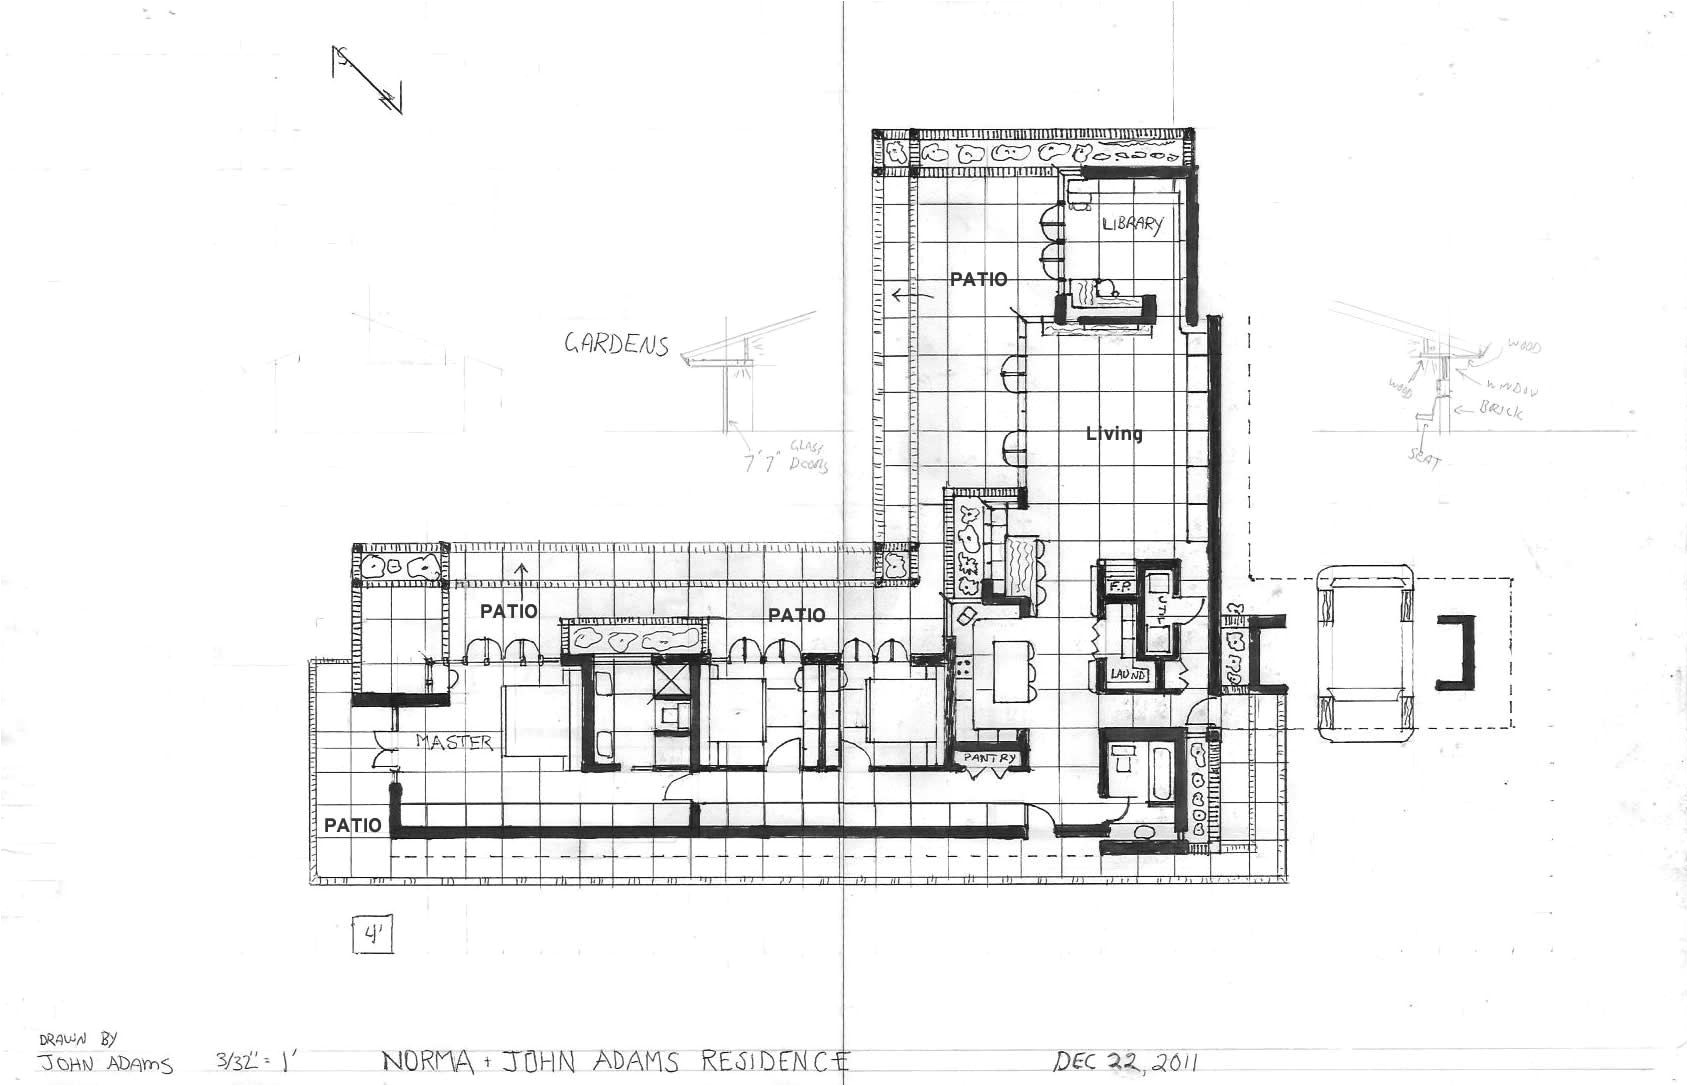 Frank Lloyd Wright Style Home Plans Plan Houses Design Frank Lloyd Wright Pesquisa Google